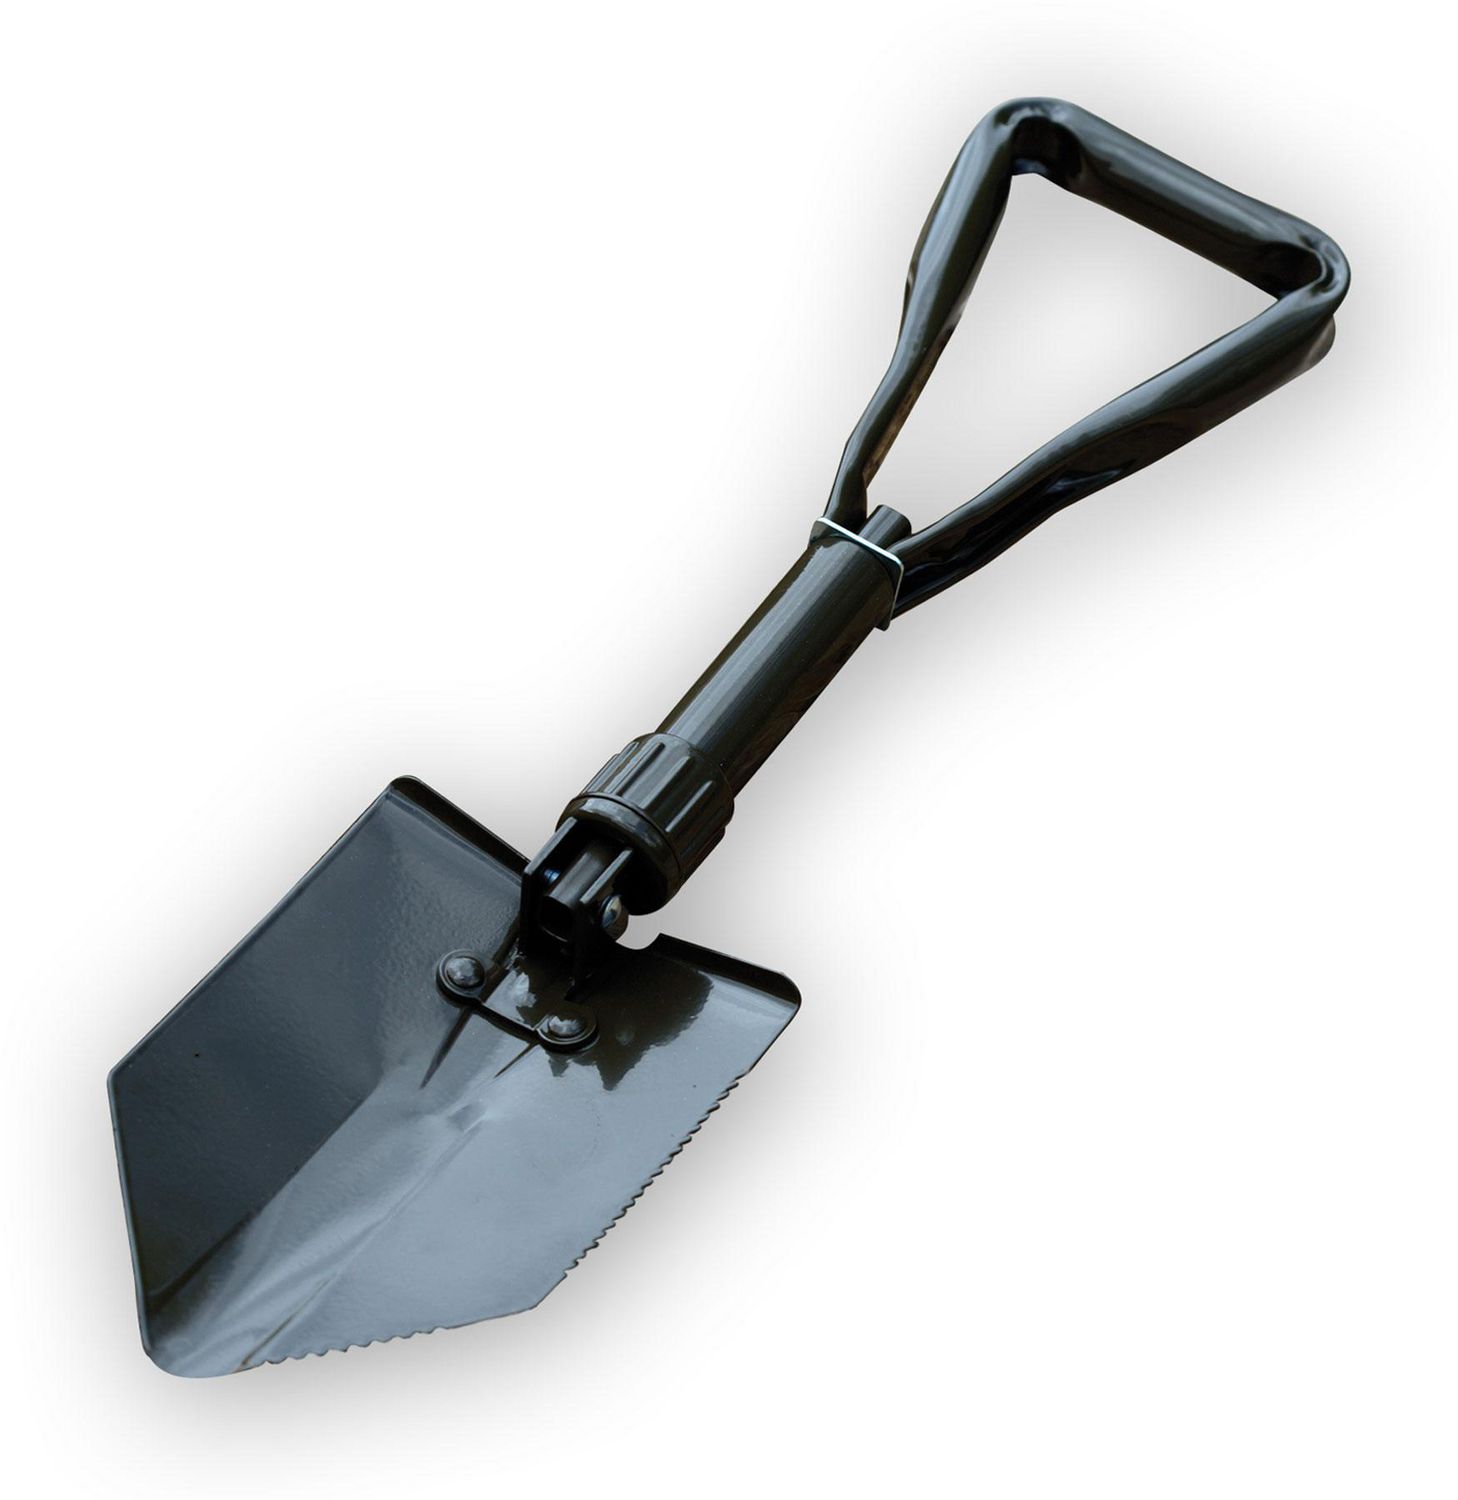 coghlan's folding shovel review